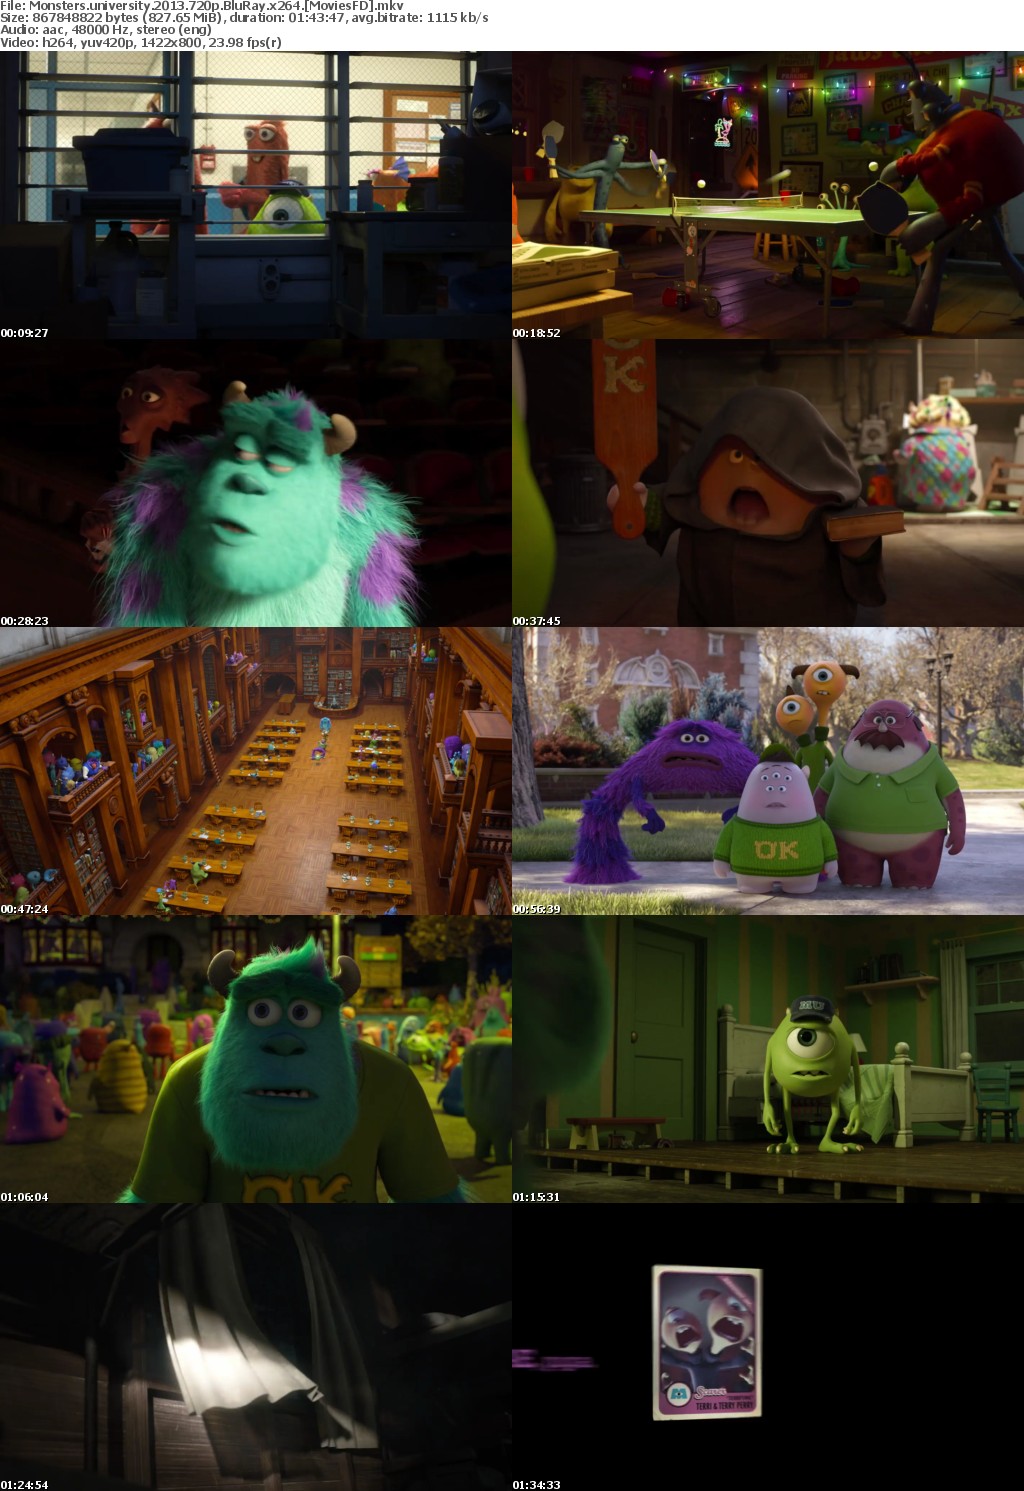 Monsters University (2013) 720p BluRay x264 - MoviesFD